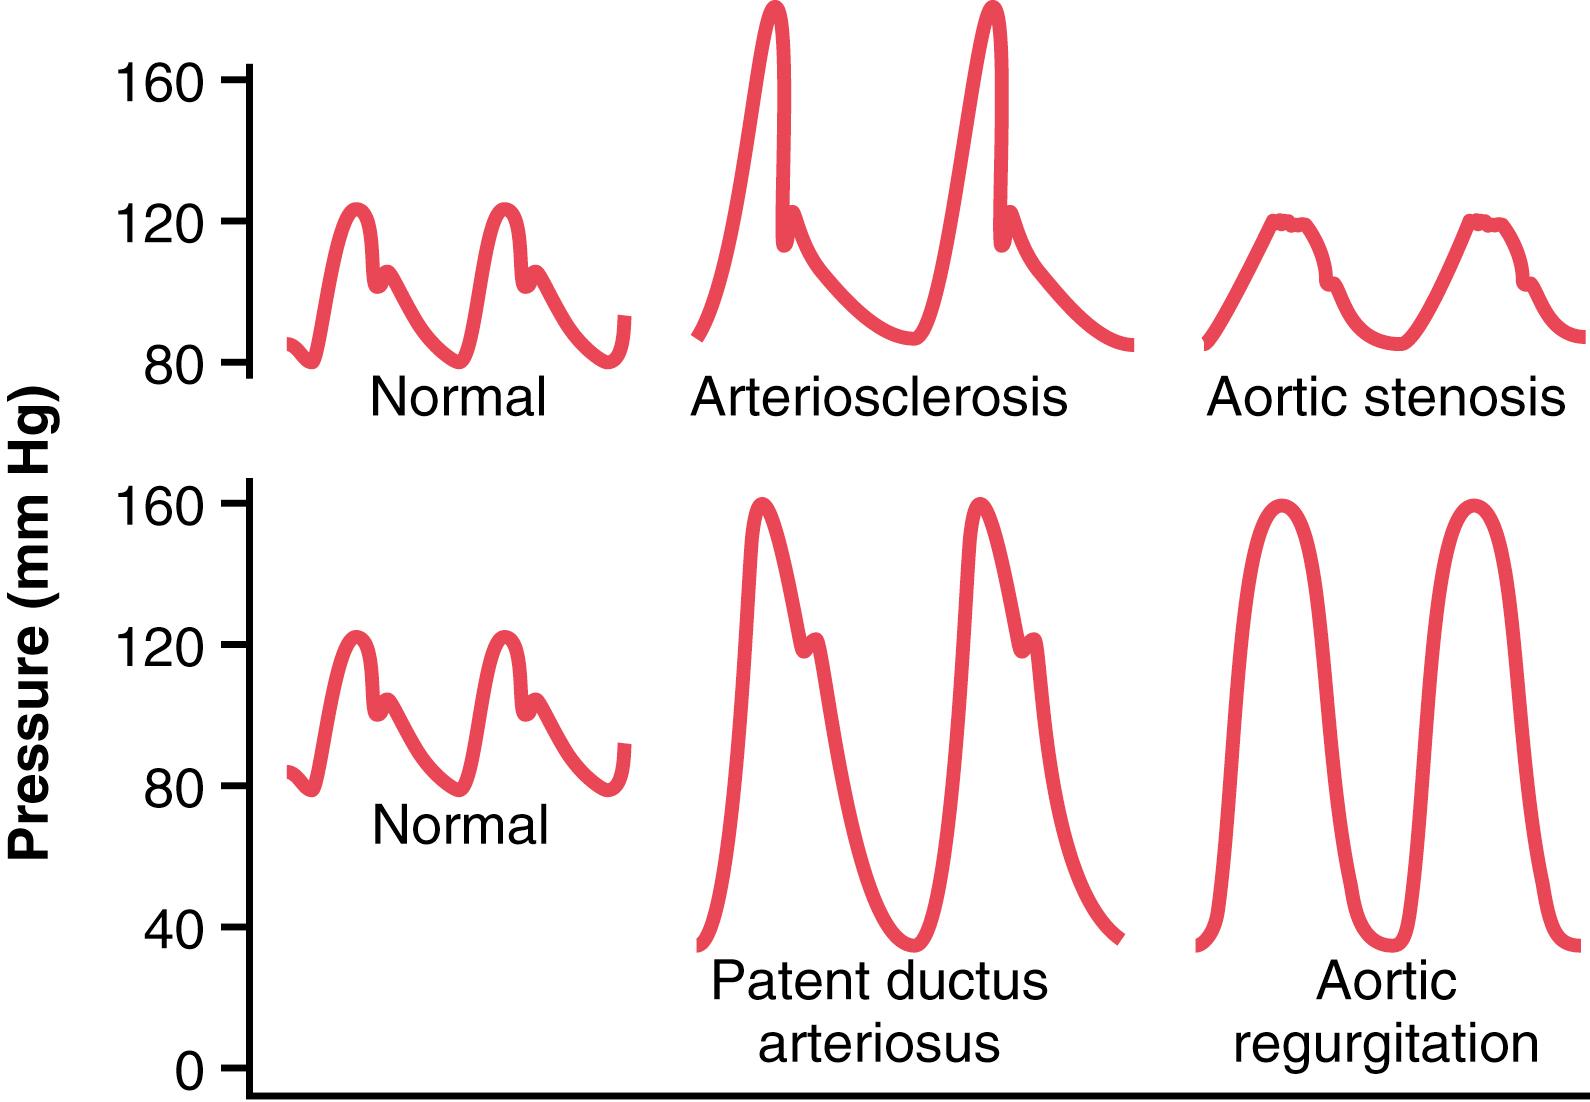 Figure 15-4, Aortic pressure pulse contours in arteriosclerosis, aortic stenosis, patent ductus arteriosus, and aortic regurgitation.